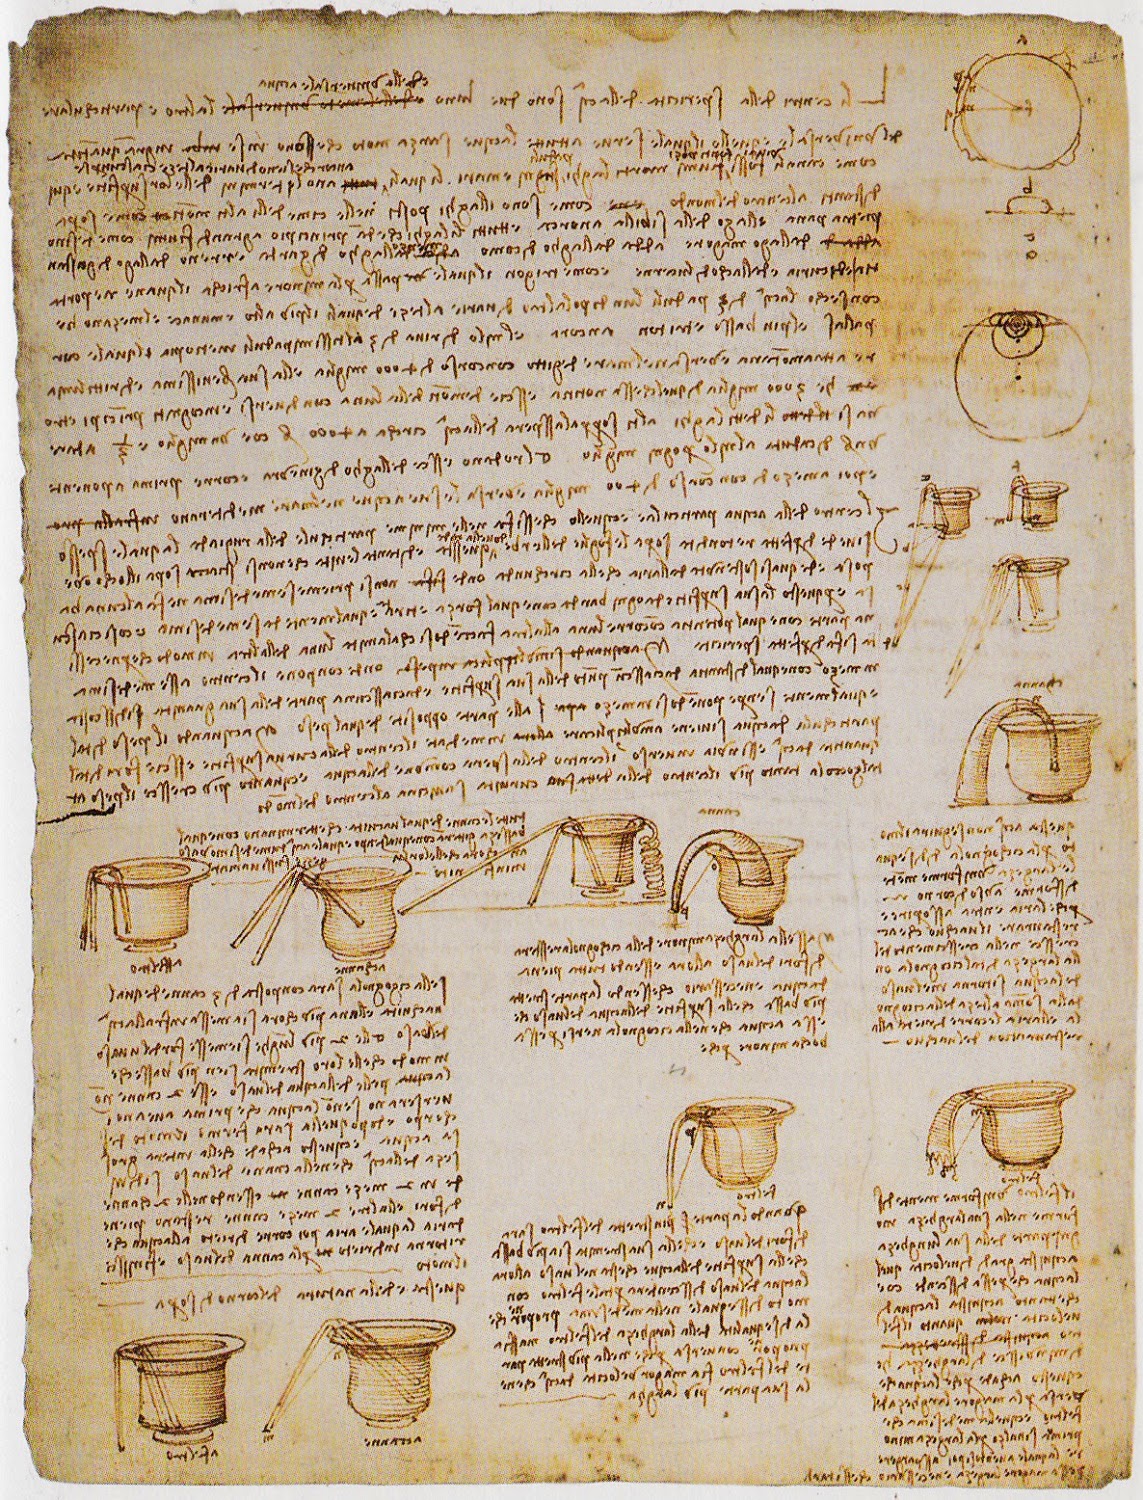 Esperimenti di sifoni di vari formati per studi sui vasi unicanti 1506 1508 circa Seattle Hammer f 34v